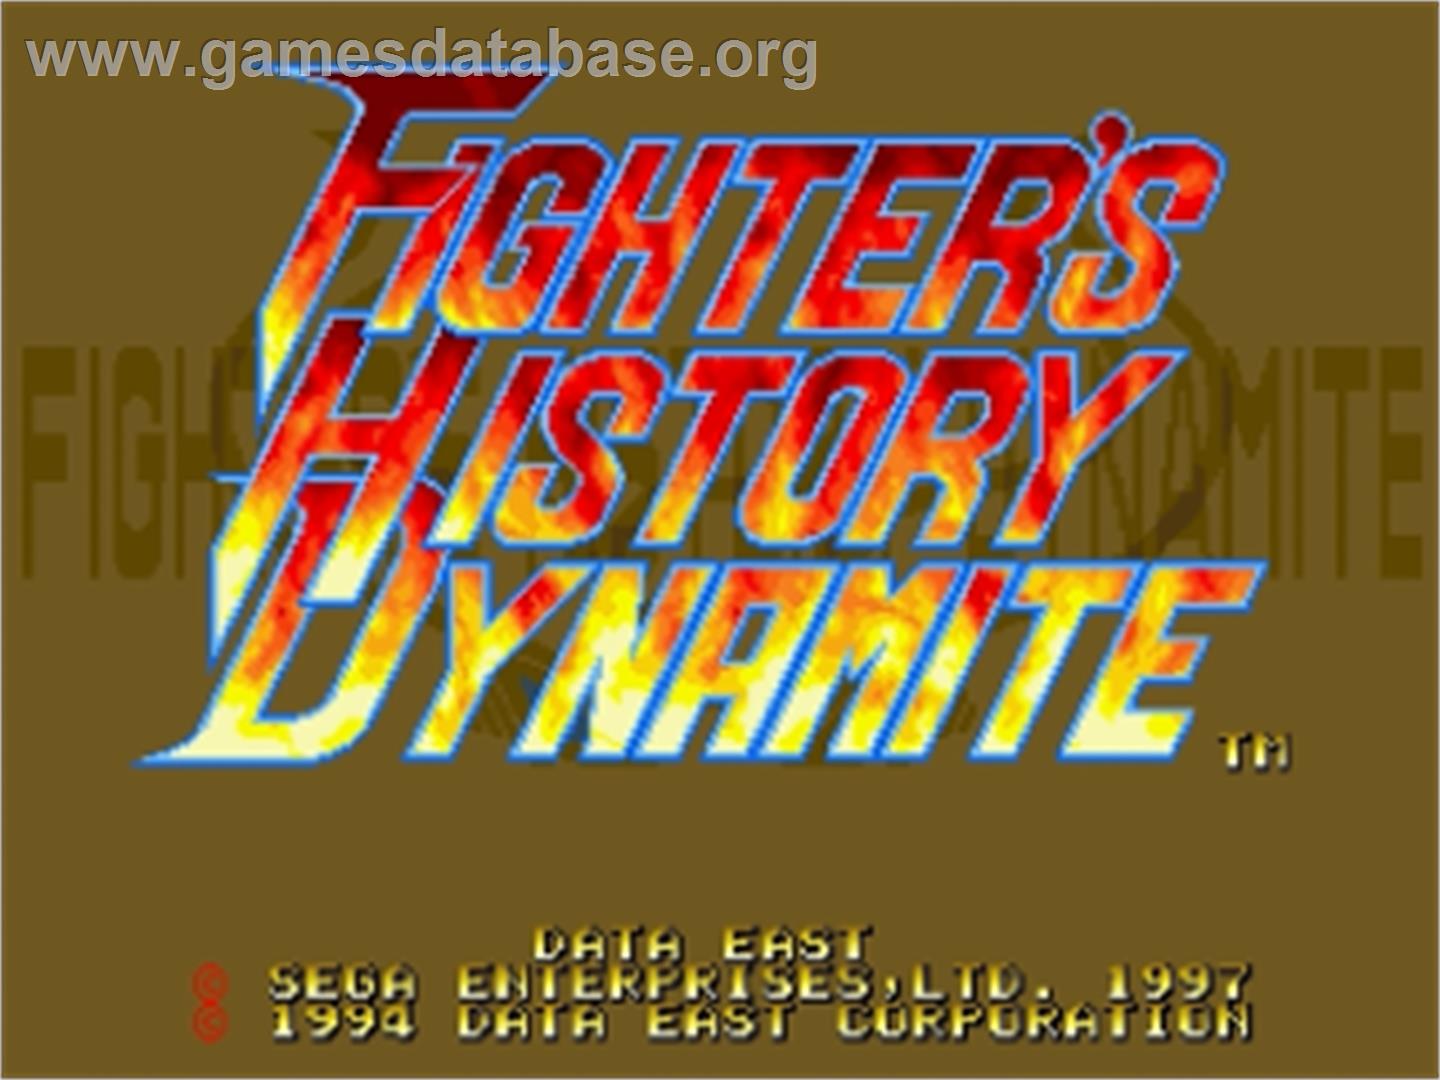 Fighter's History Dynamite - Sega Saturn - Artwork - Title Screen